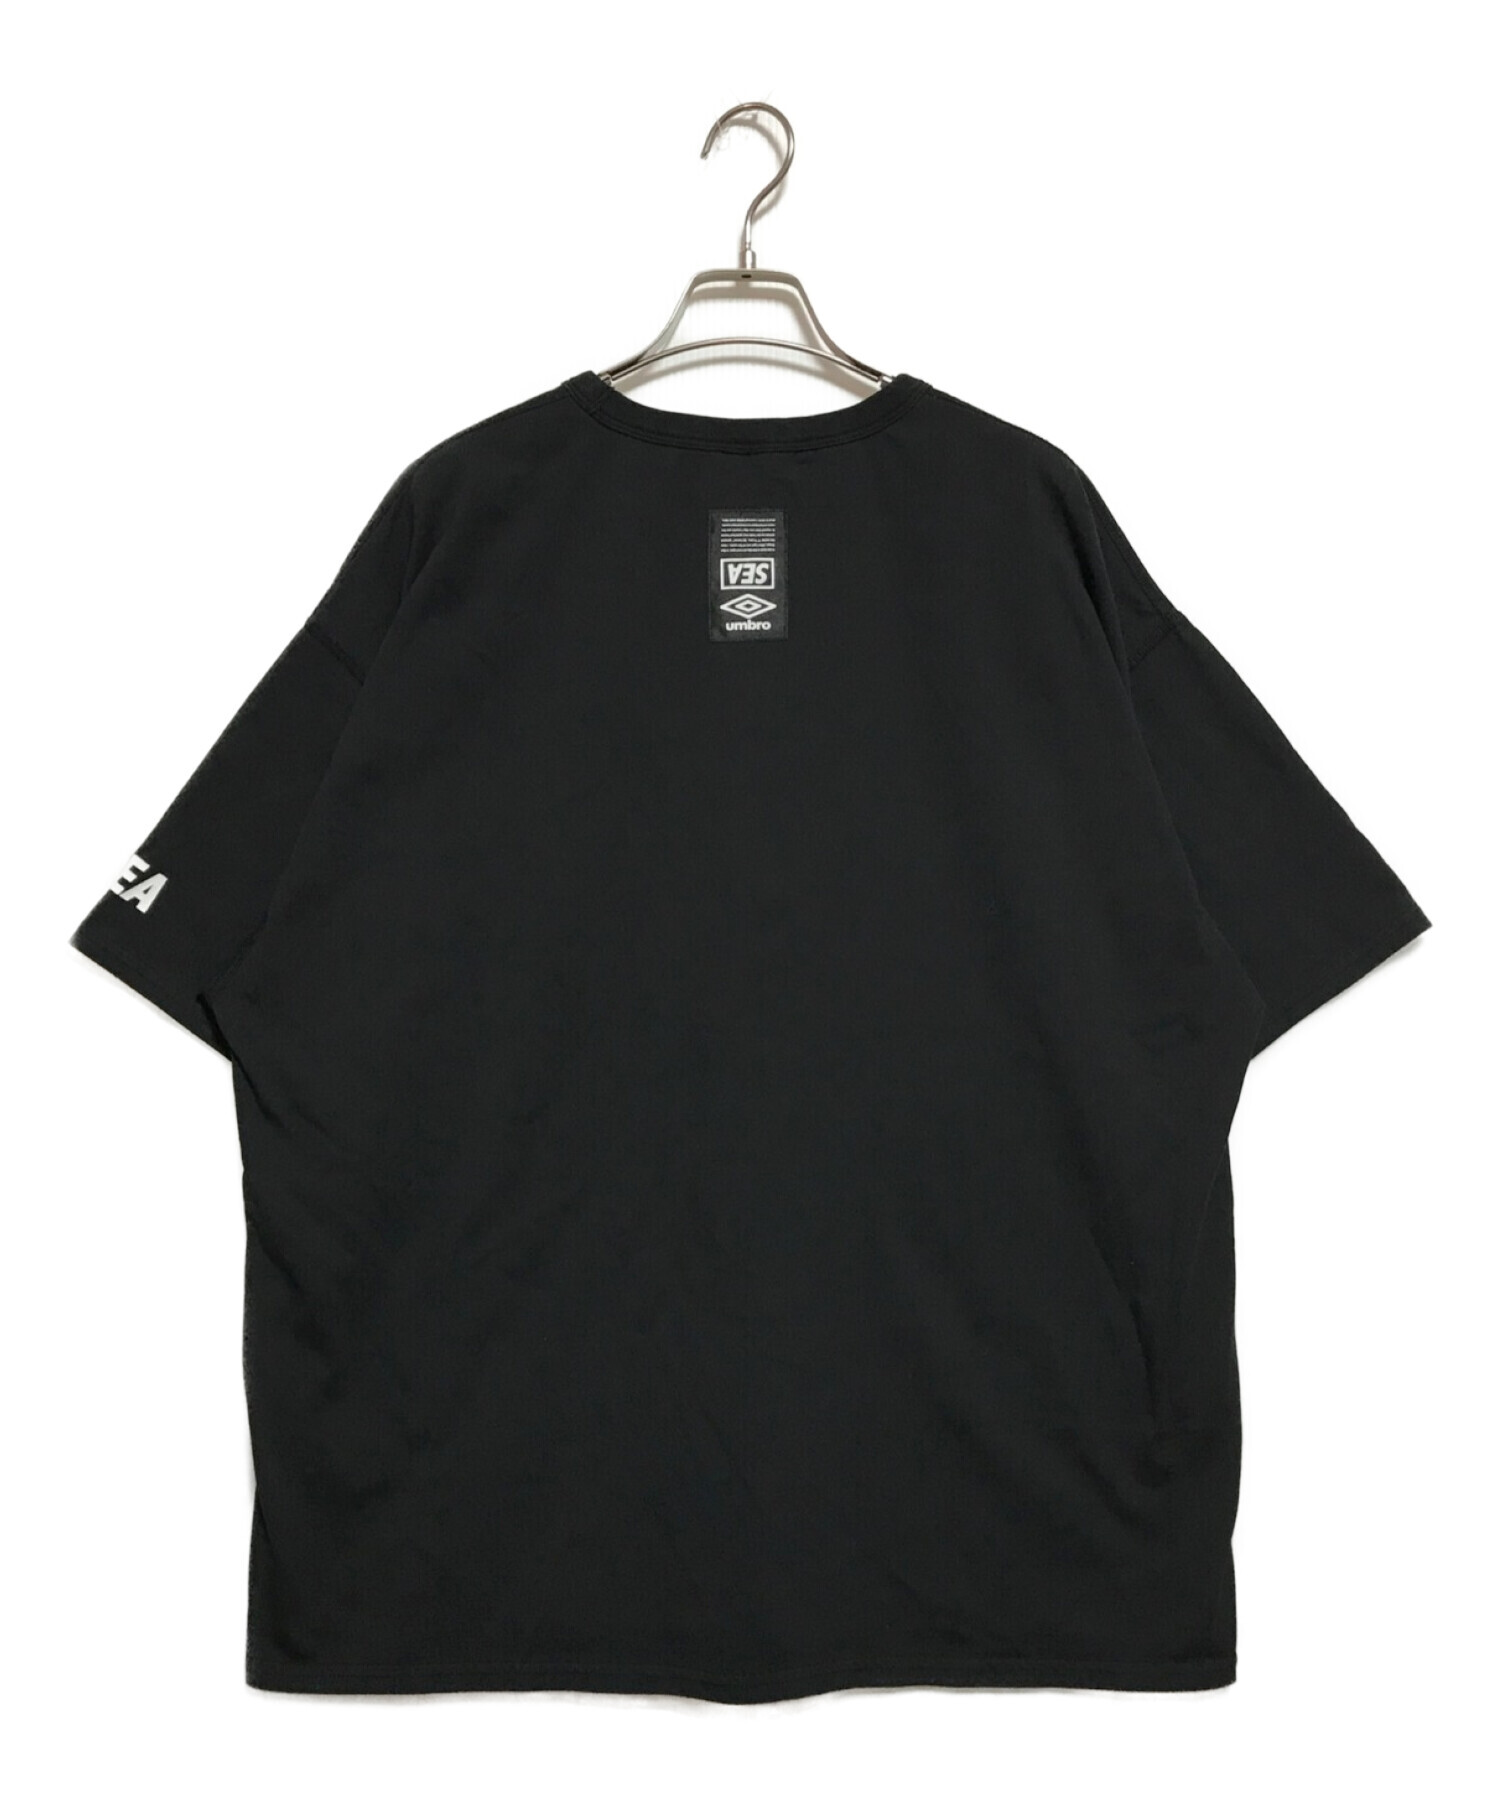 WIND AND SEA umbro Tシャツ Lサイズ 黒 blackトップス - Tシャツ